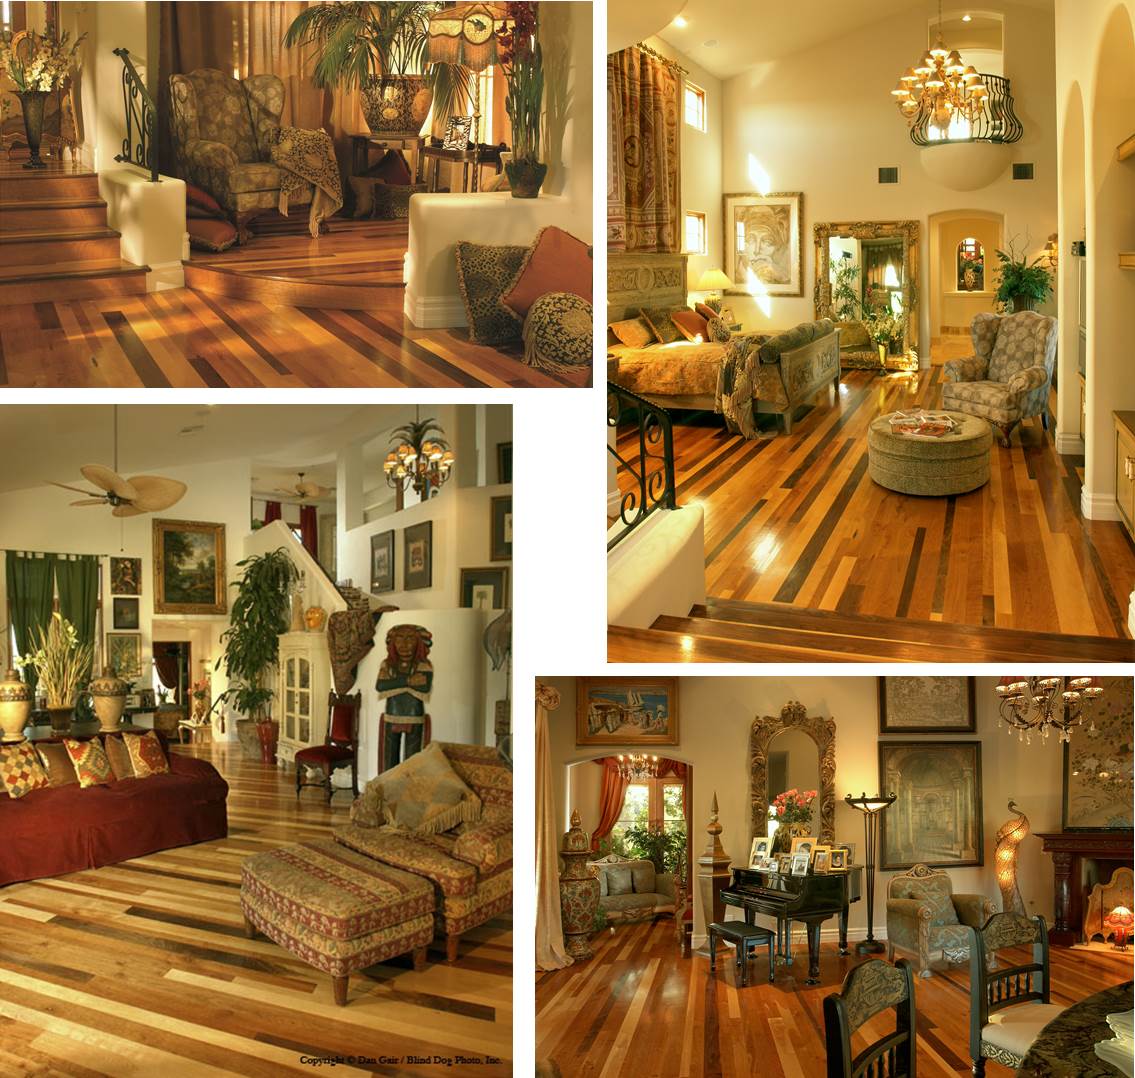 Cherry Wood floor and MAple Hardwood Flooring from Carlisle Wide Plank Floors